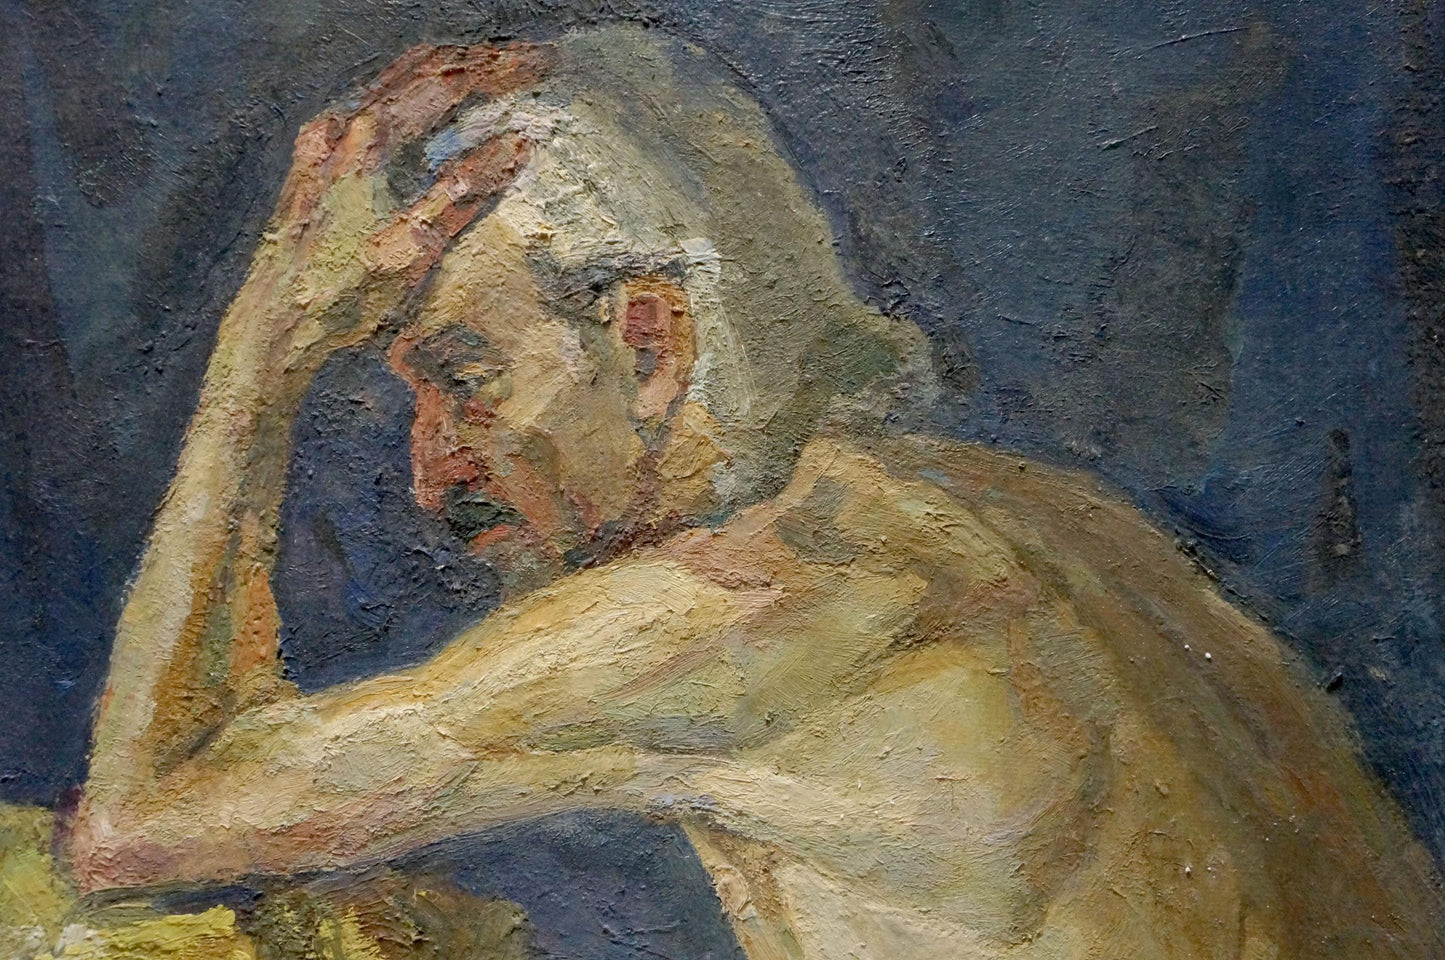 Oil painting Pensive portrait of a grandfather Maria Titarenko